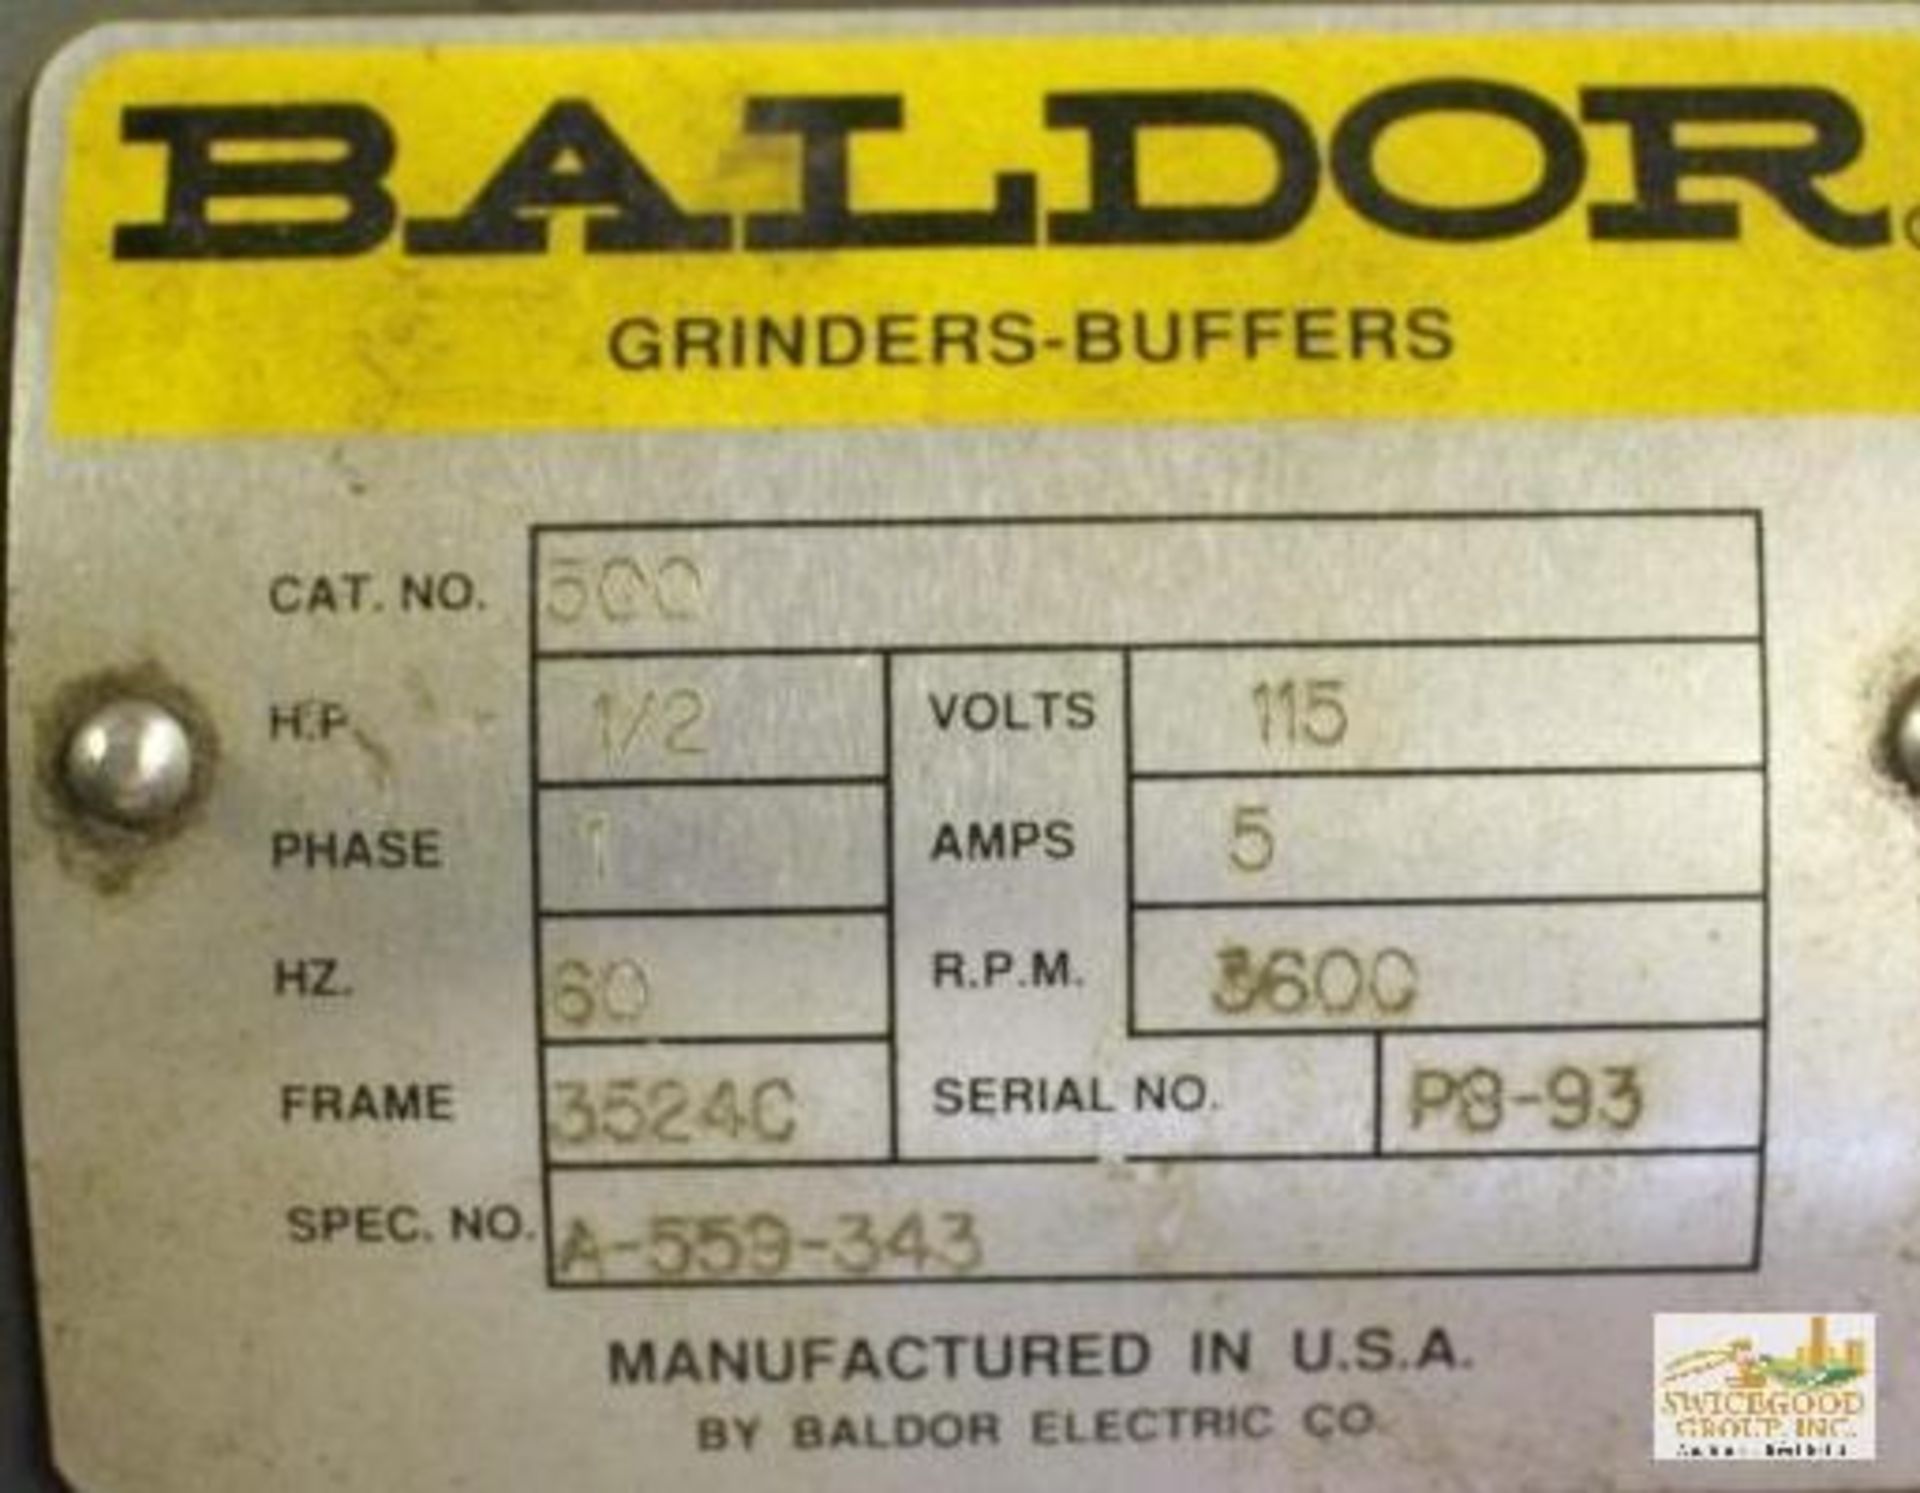 Baldor, (1) Grinders/Buffers, Cat #500, 1/2 HP, 115 Volts - Image 5 of 5